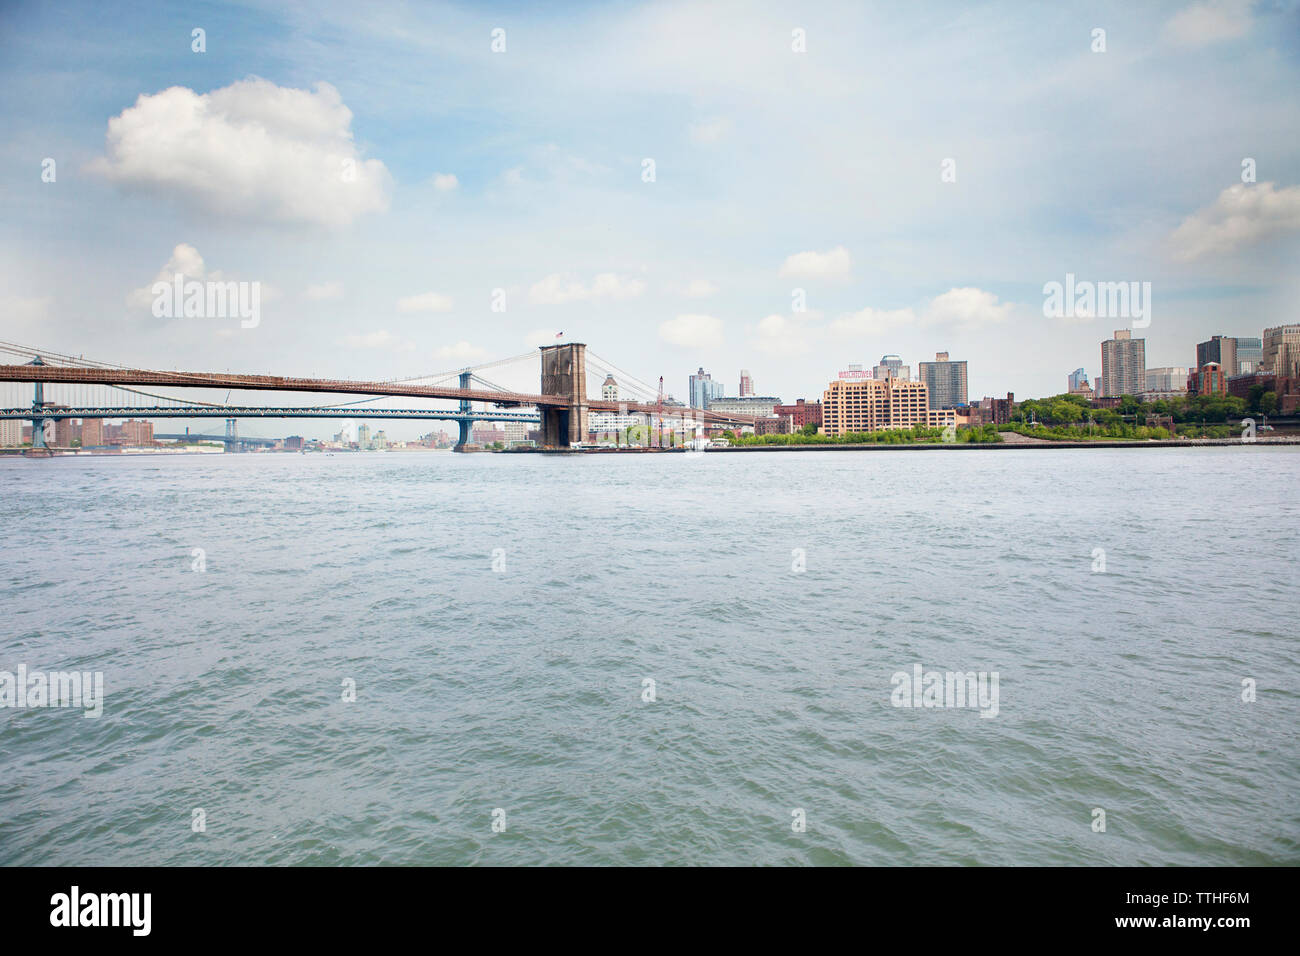 Bridges over East river in city against sky Stock Photo